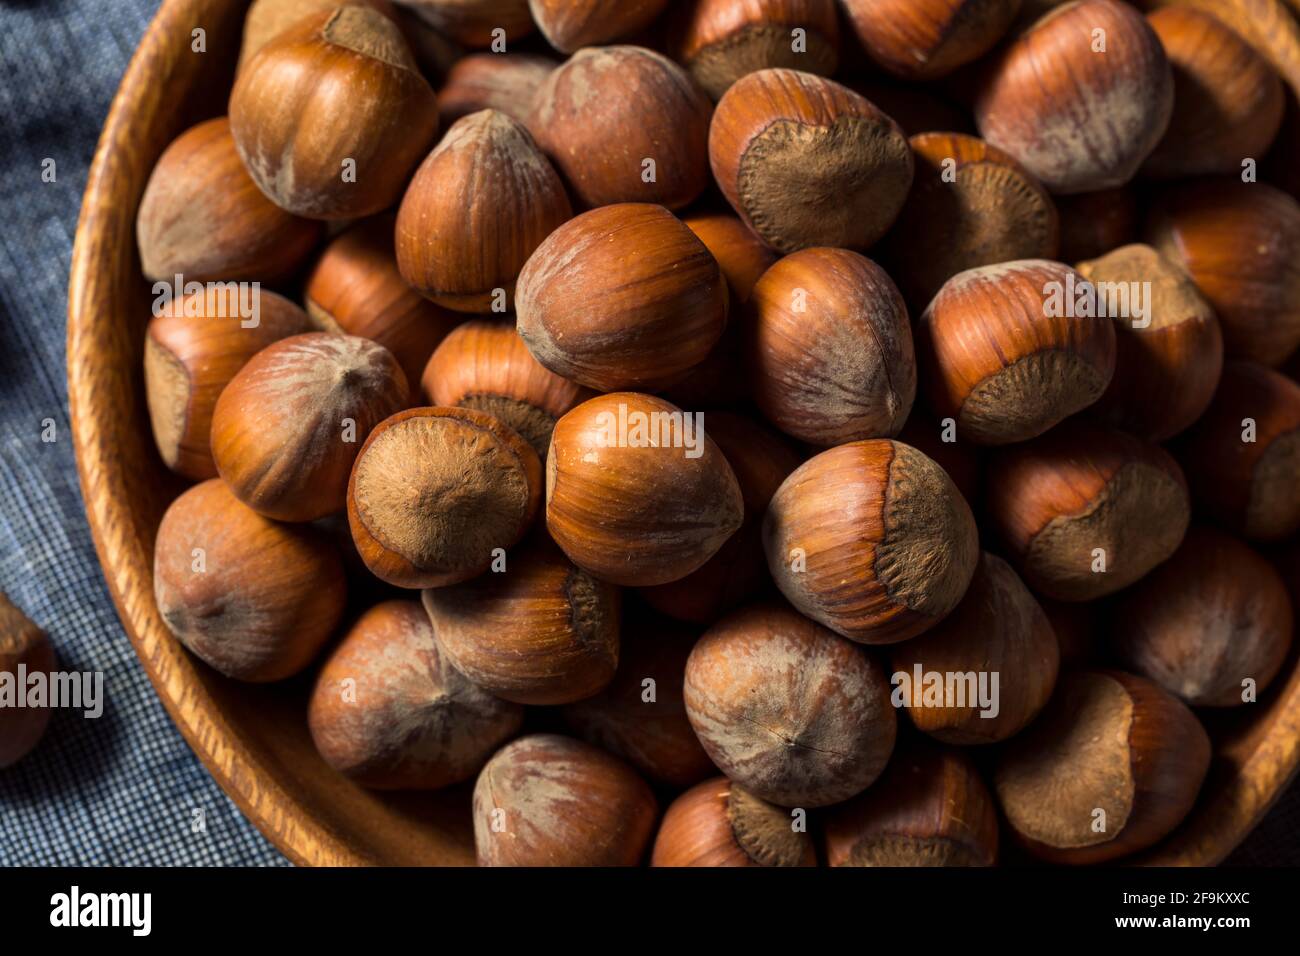 Raw Organic Unshelled Hazelnuts in a Bowl Stock Photo